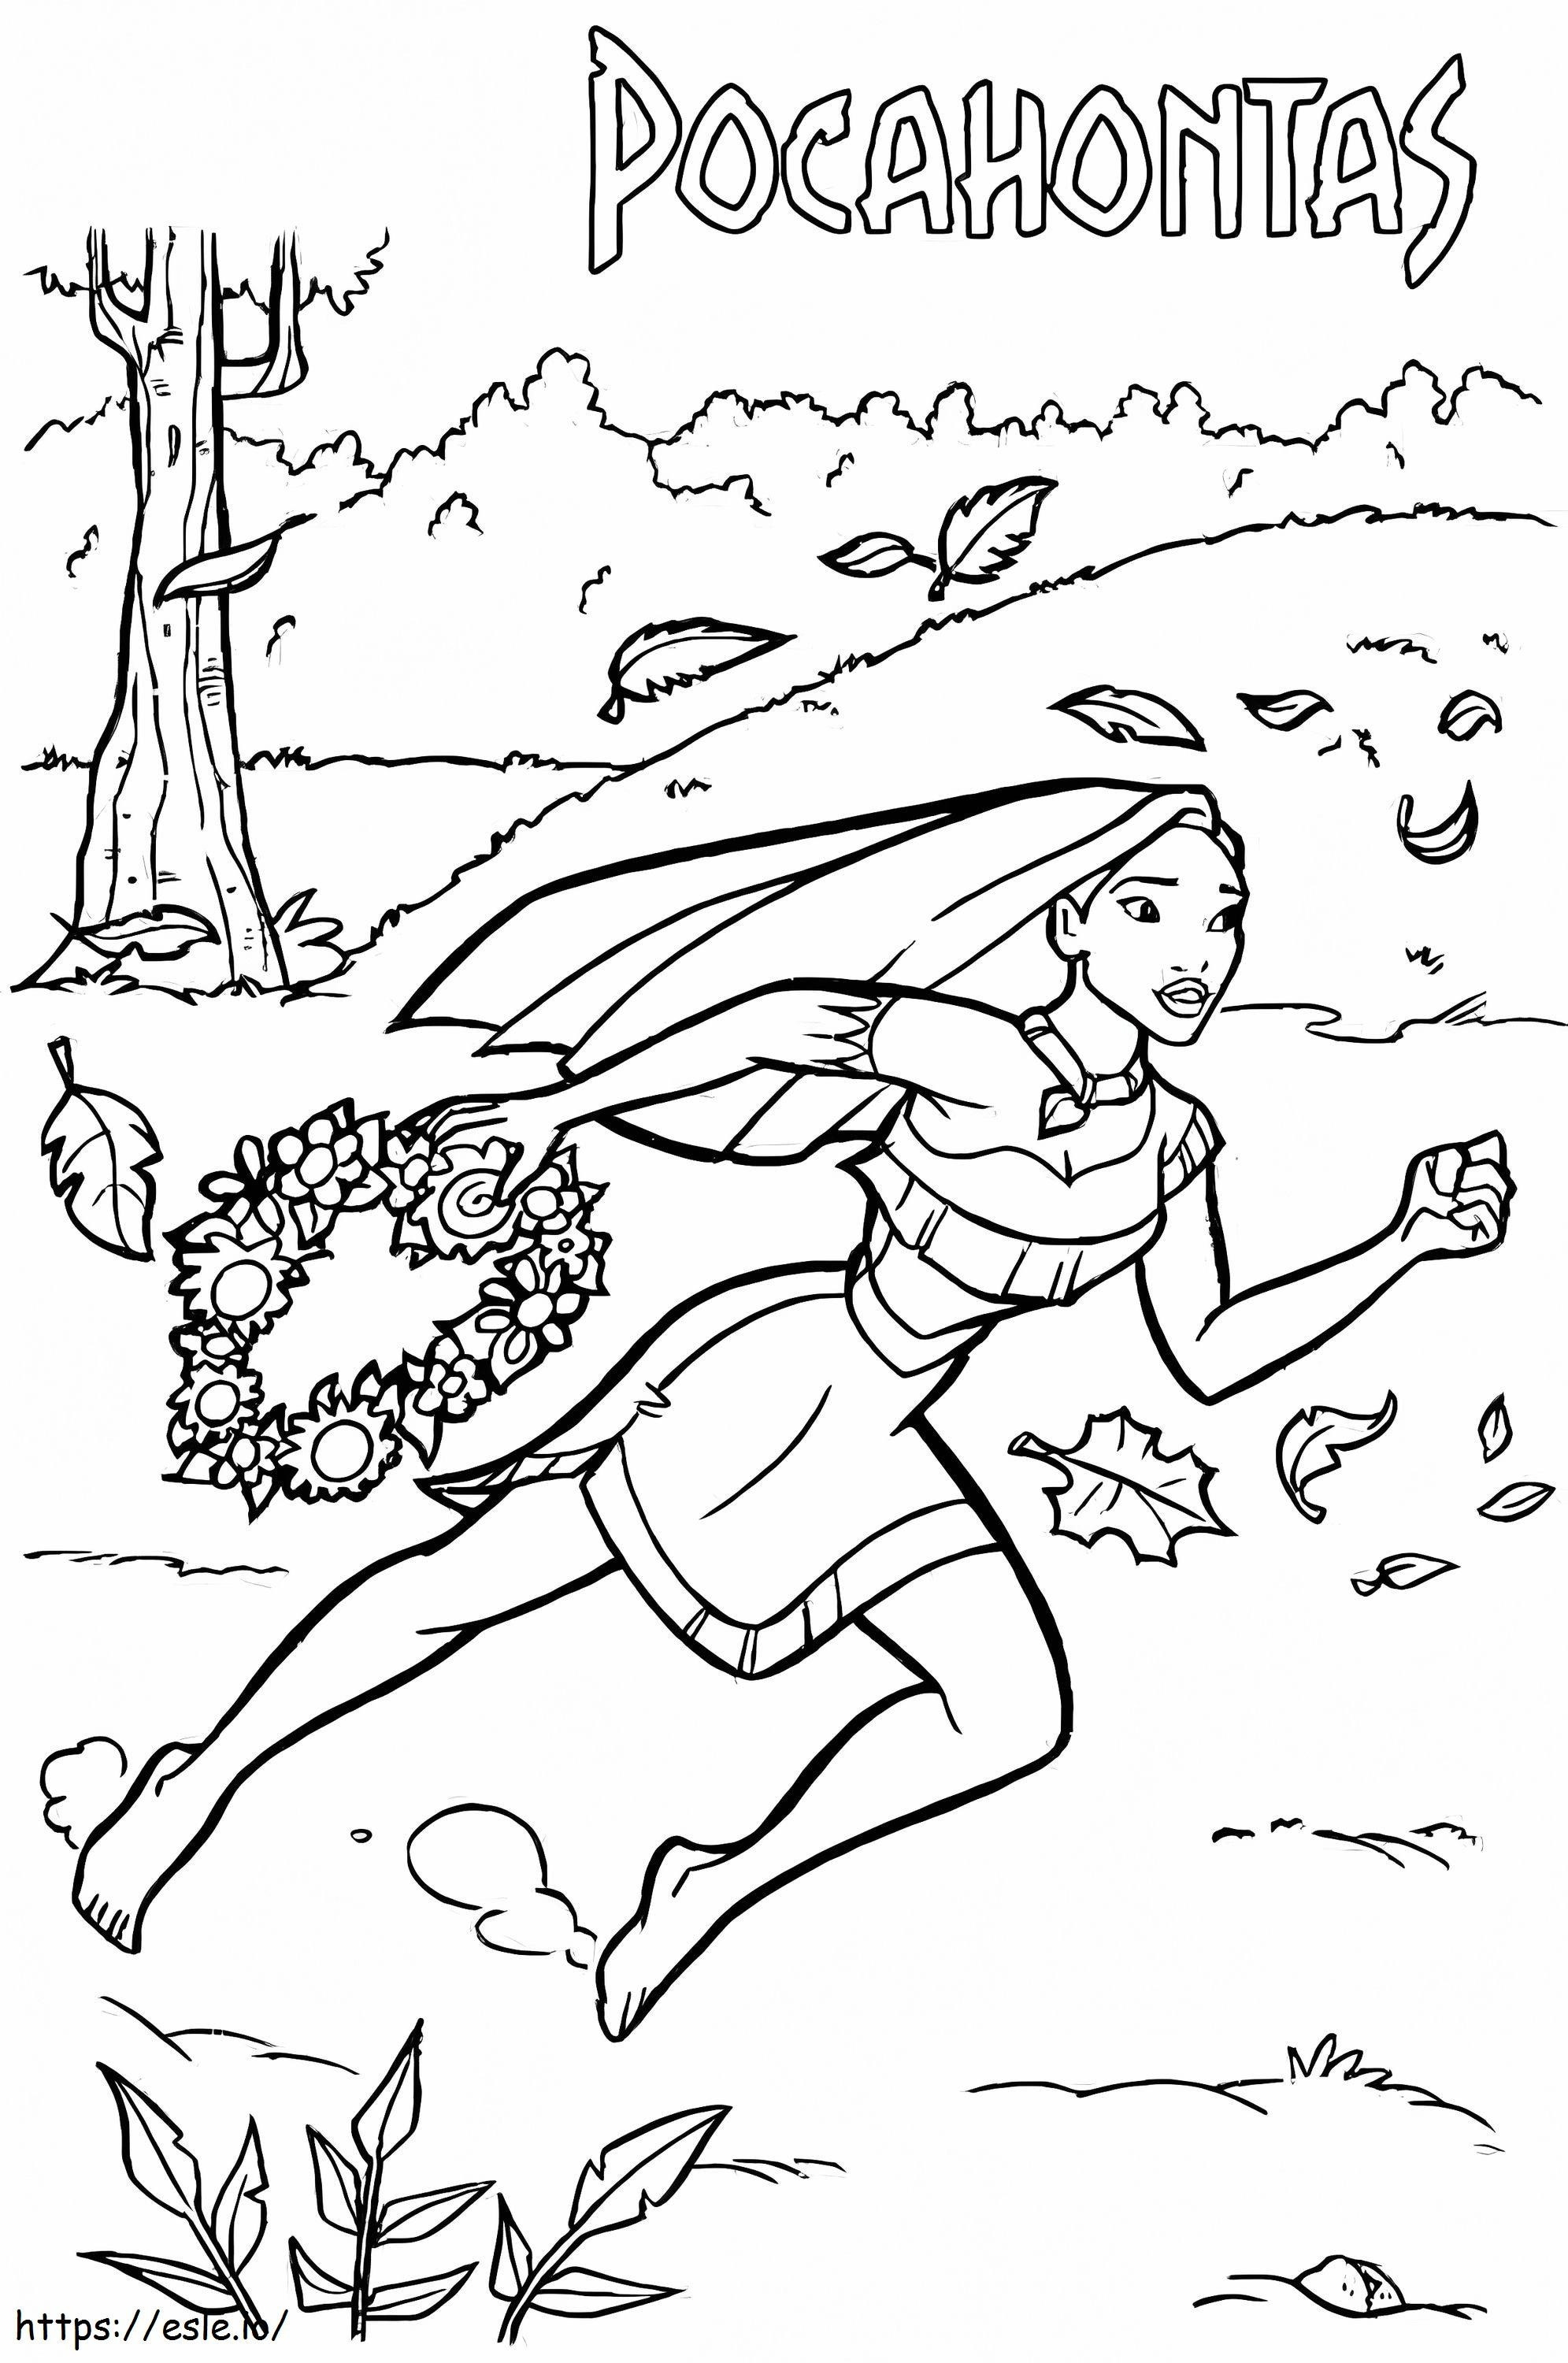 Pocahontas está correndo para colorir